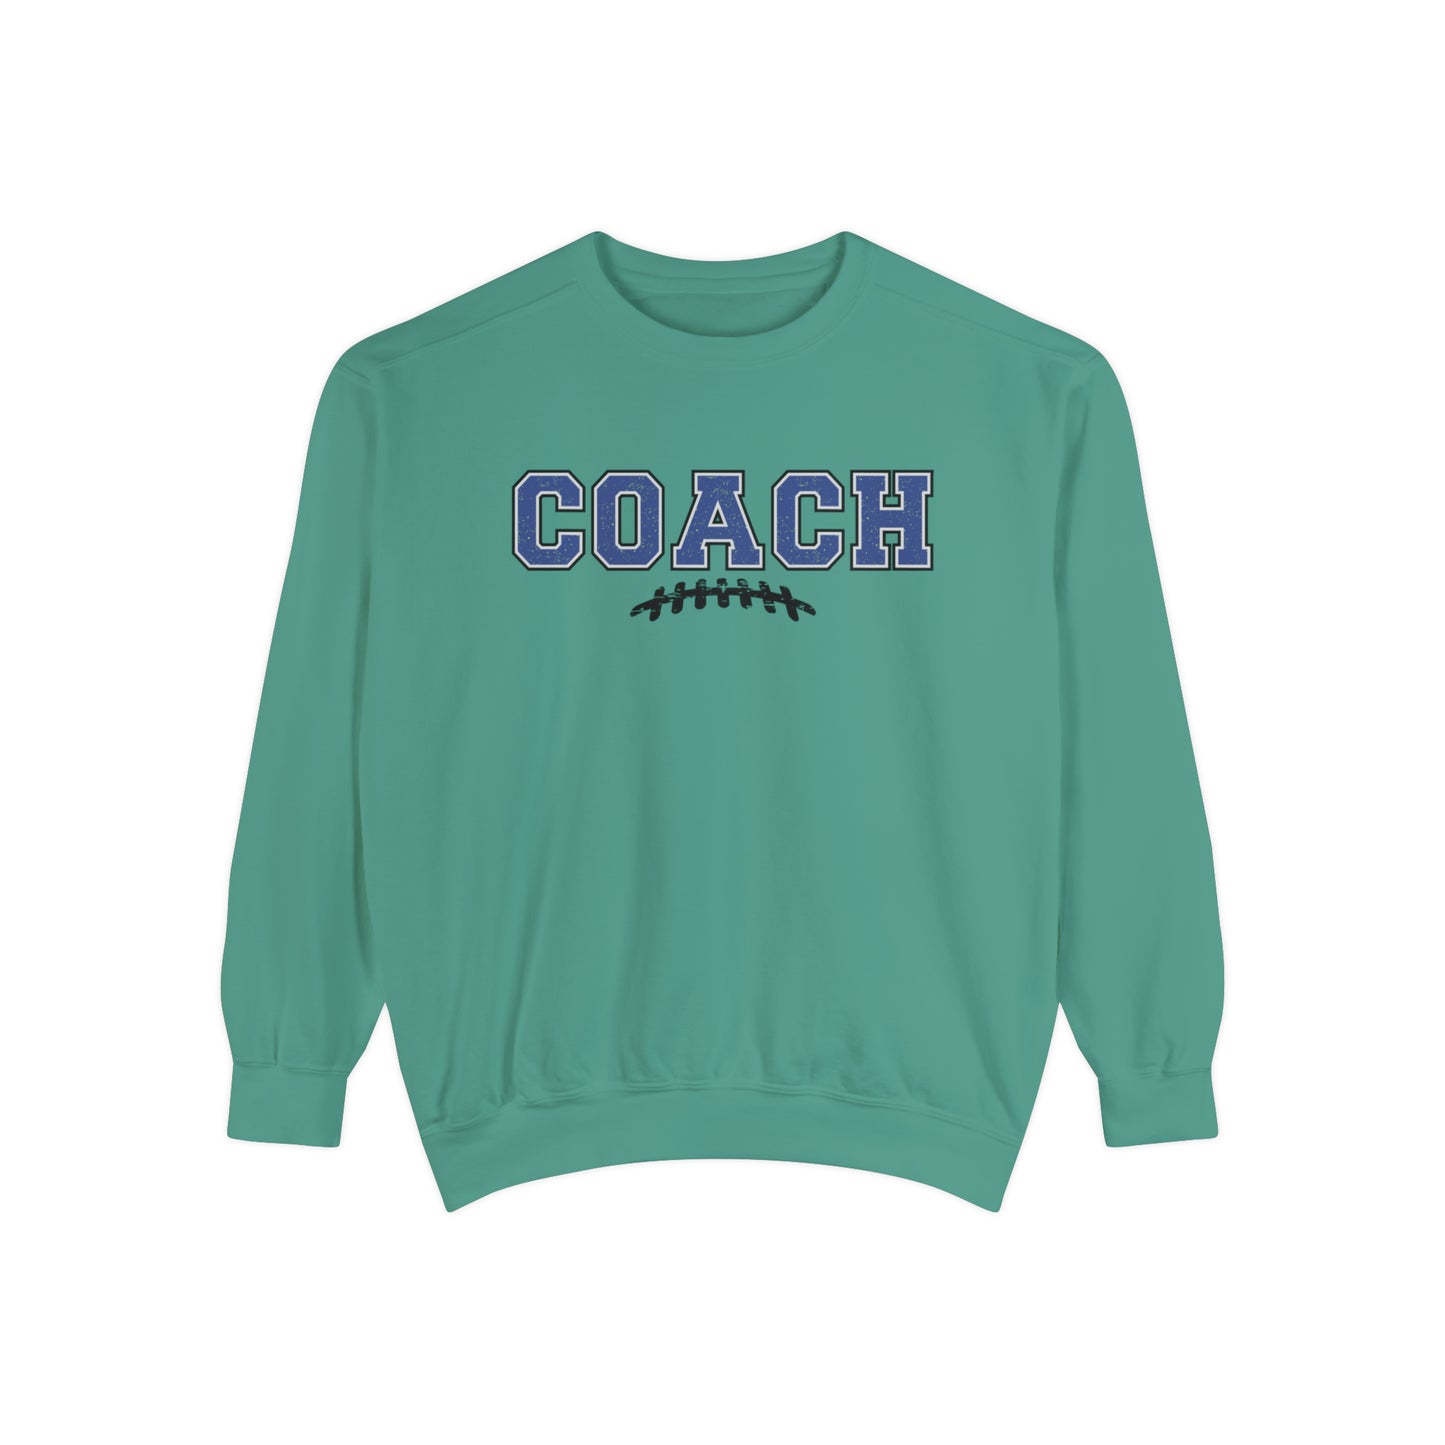 Gridiron Glory Premium Coach Men's Comfort Colors Sweatshirt - Eddy and Rita